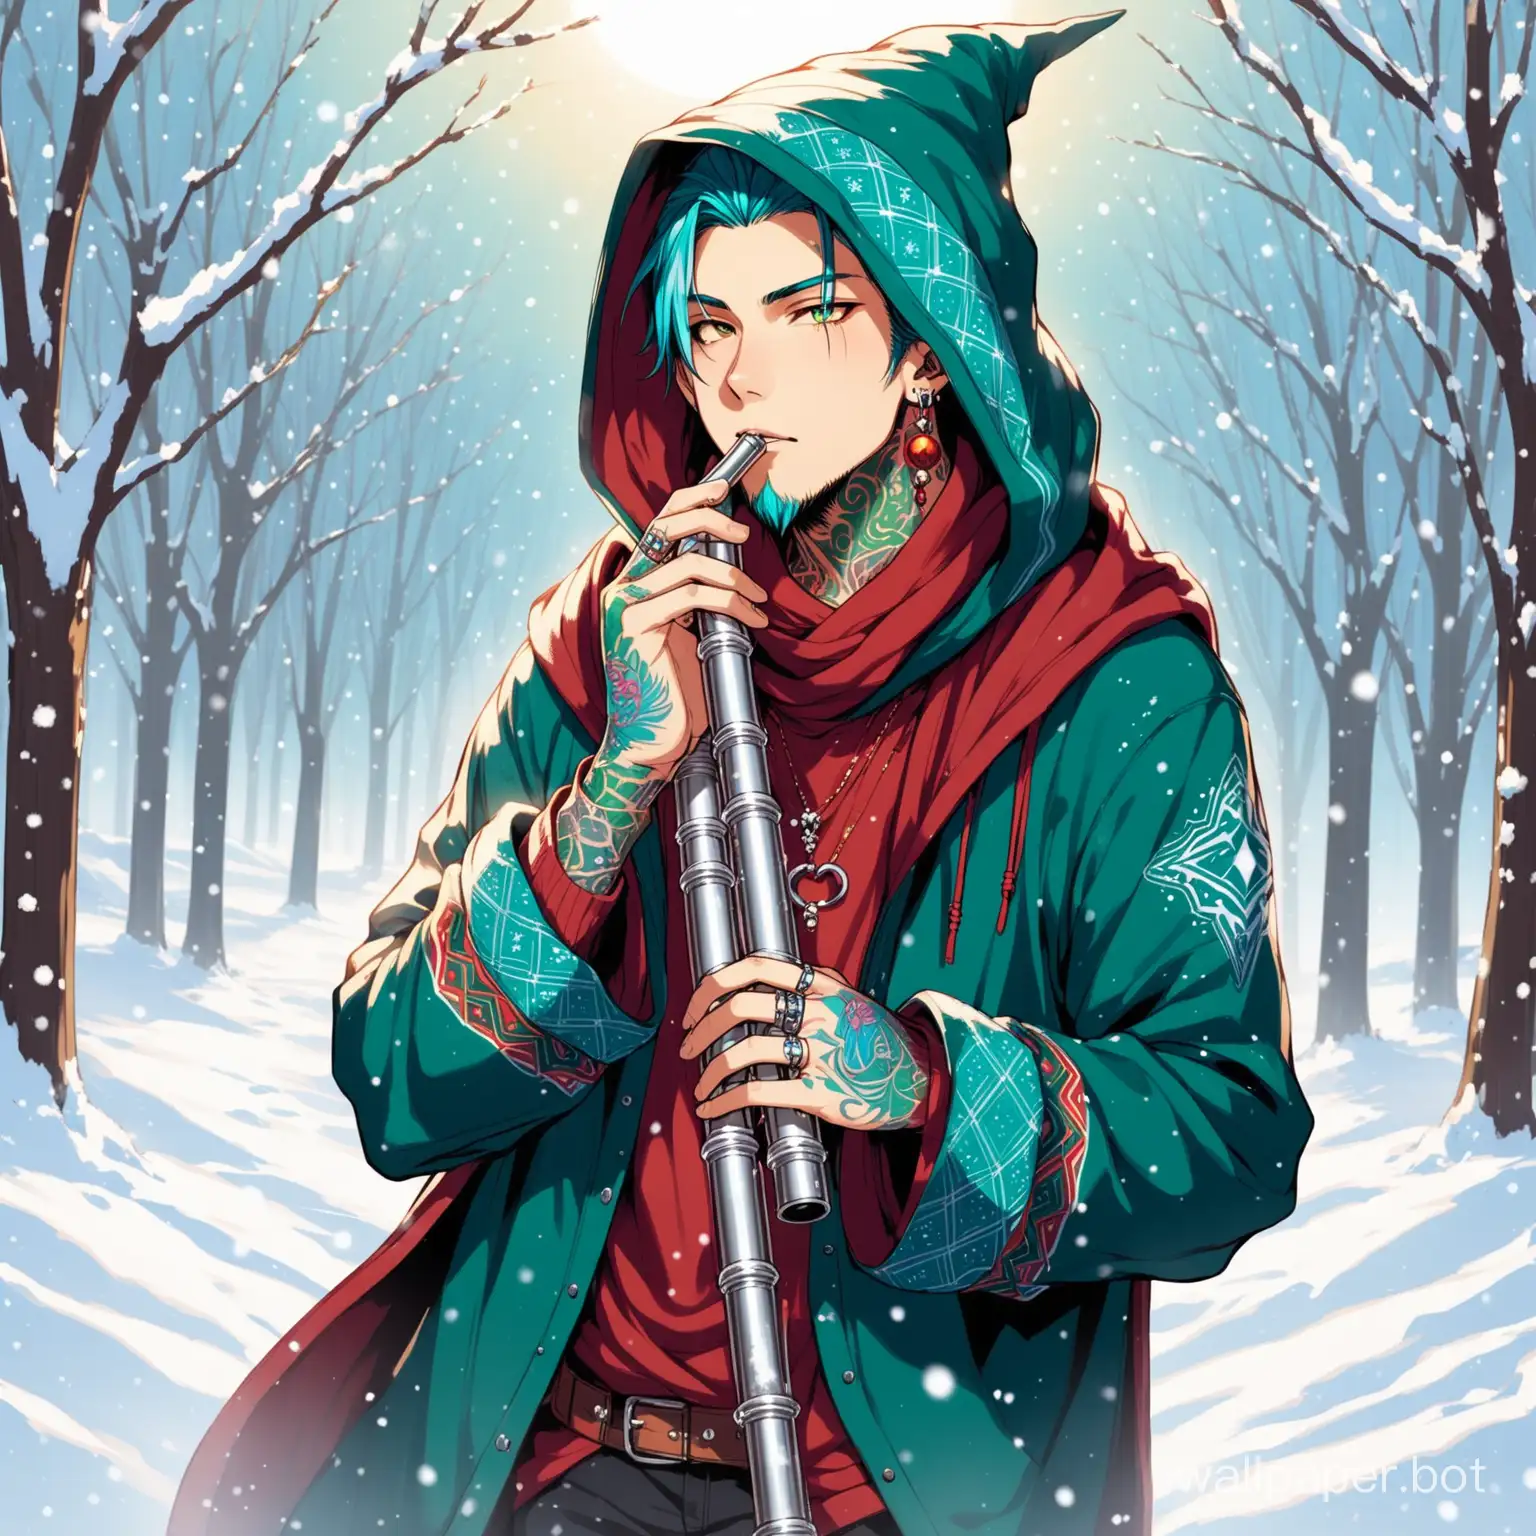 Enchanting-Wizard-Playing-Steel-Flute-in-Snowy-Landscape